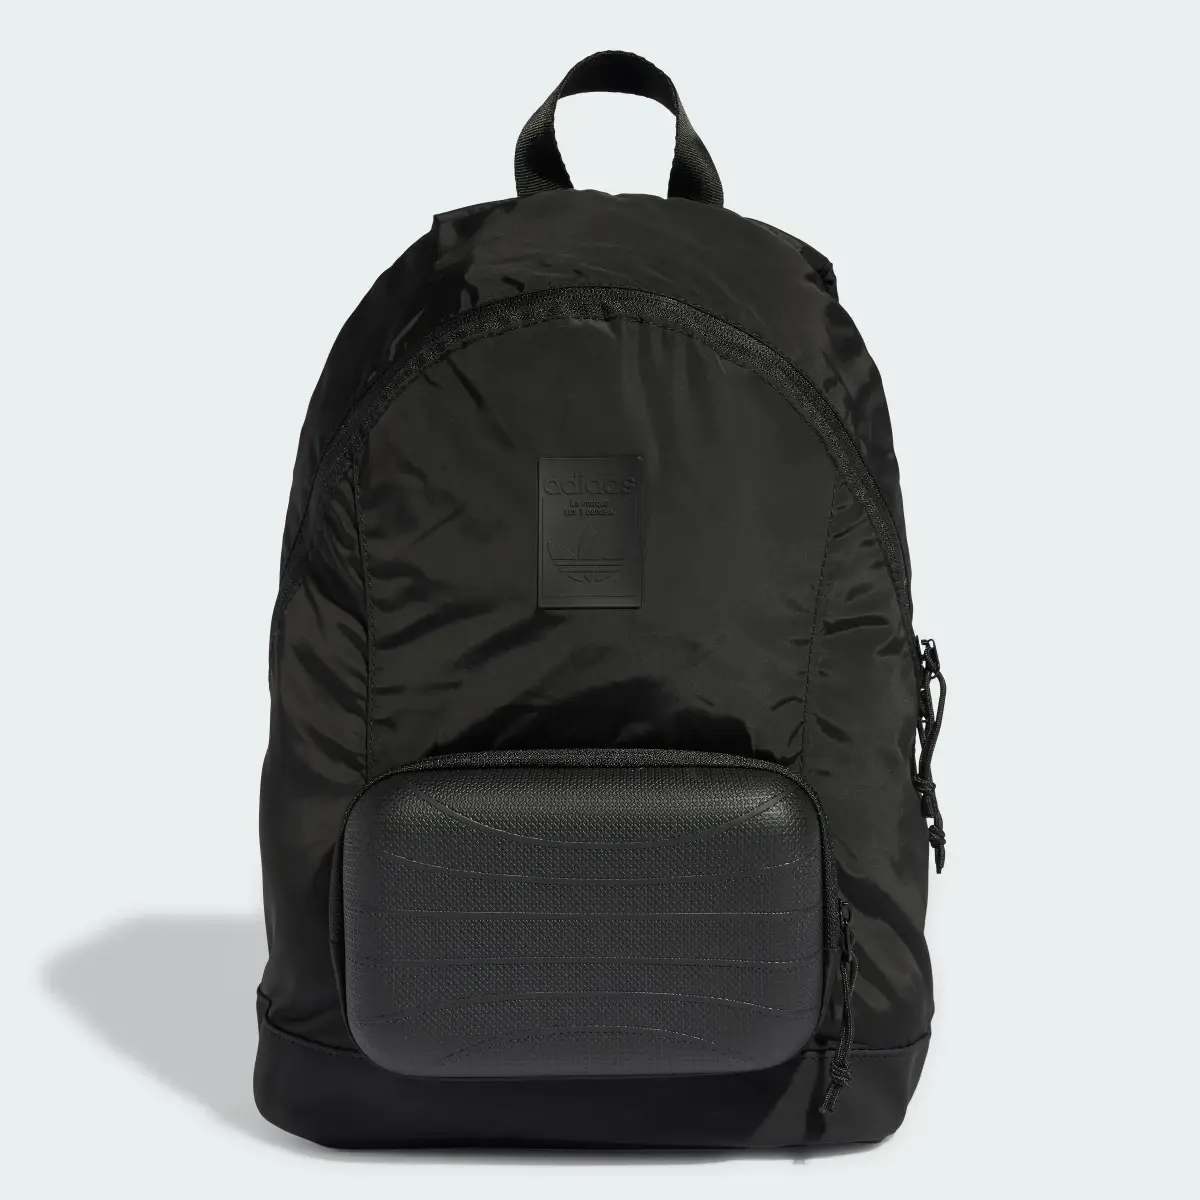 Adidas SST Backpack. 2